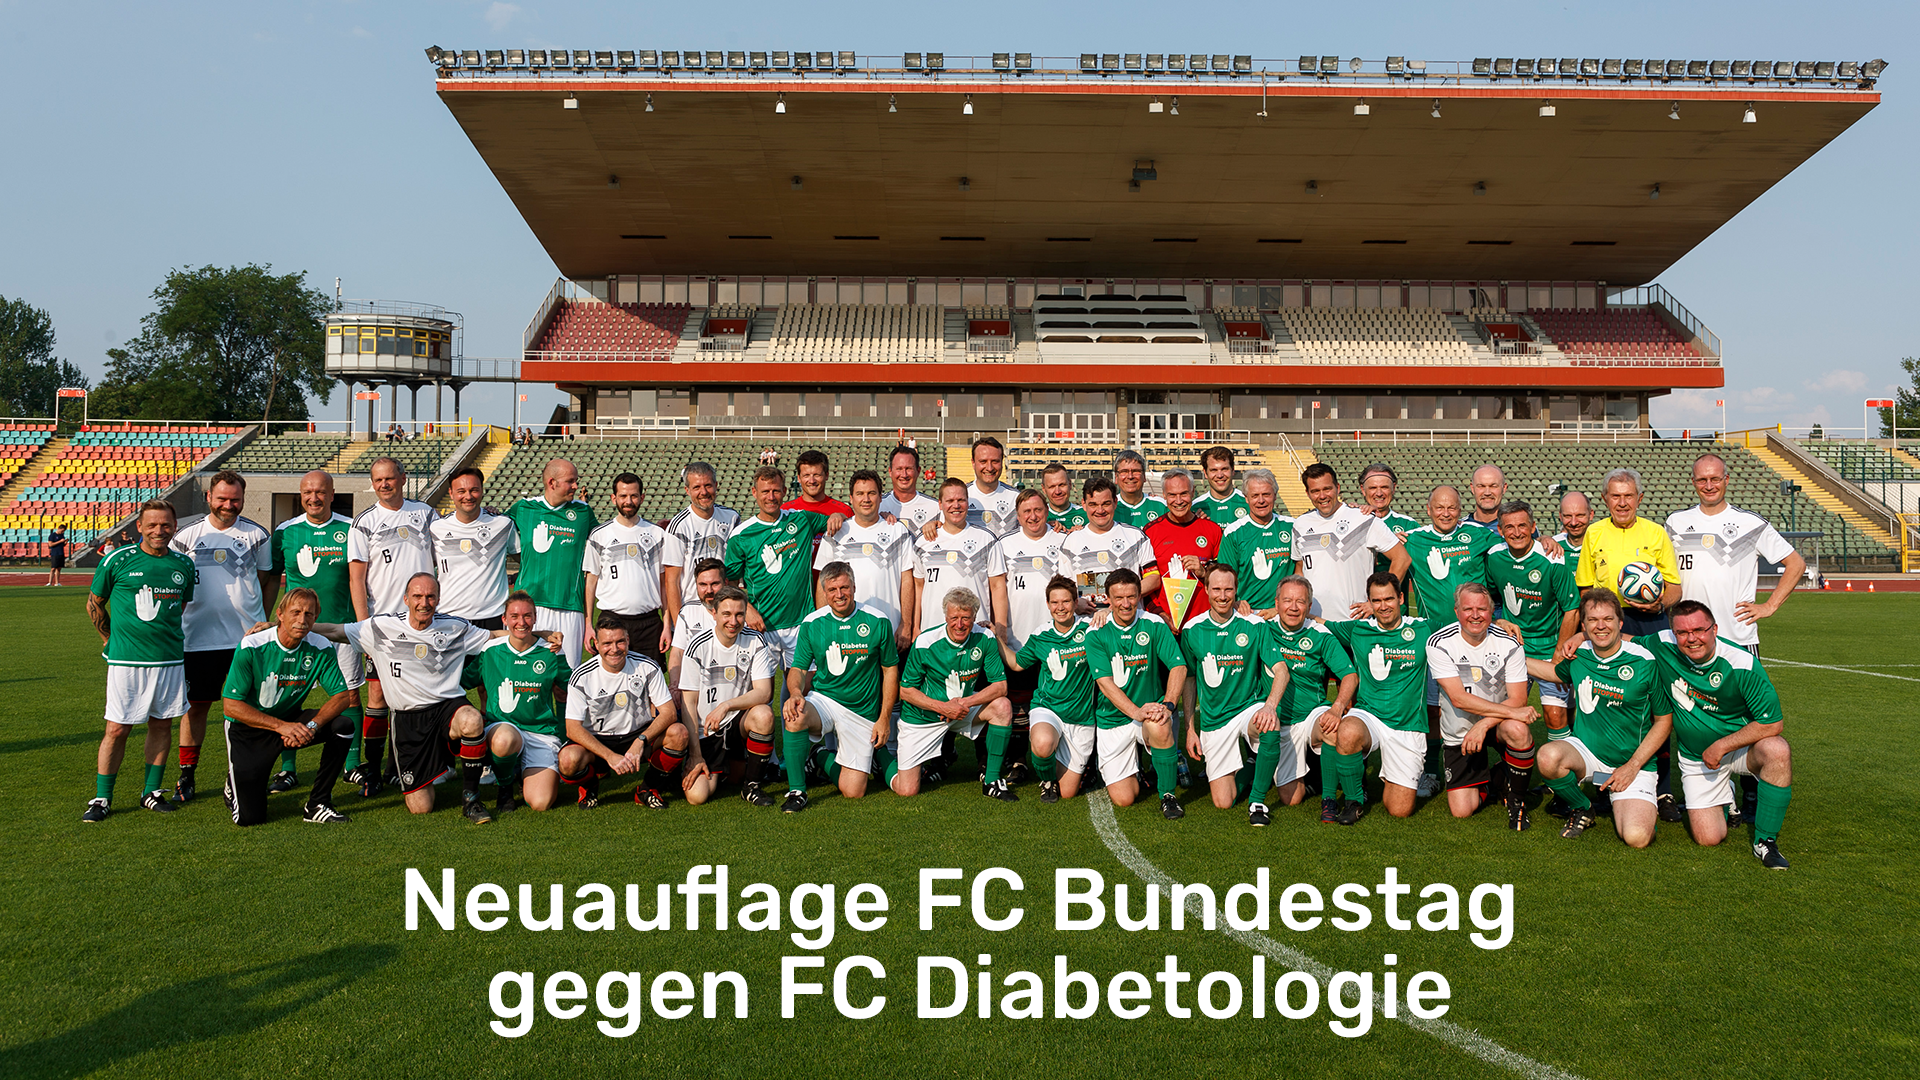 Deutsche Diabetes Hilfe, diabetesDE – Neuauflage FC Bundestag gegen FC Diabetologie